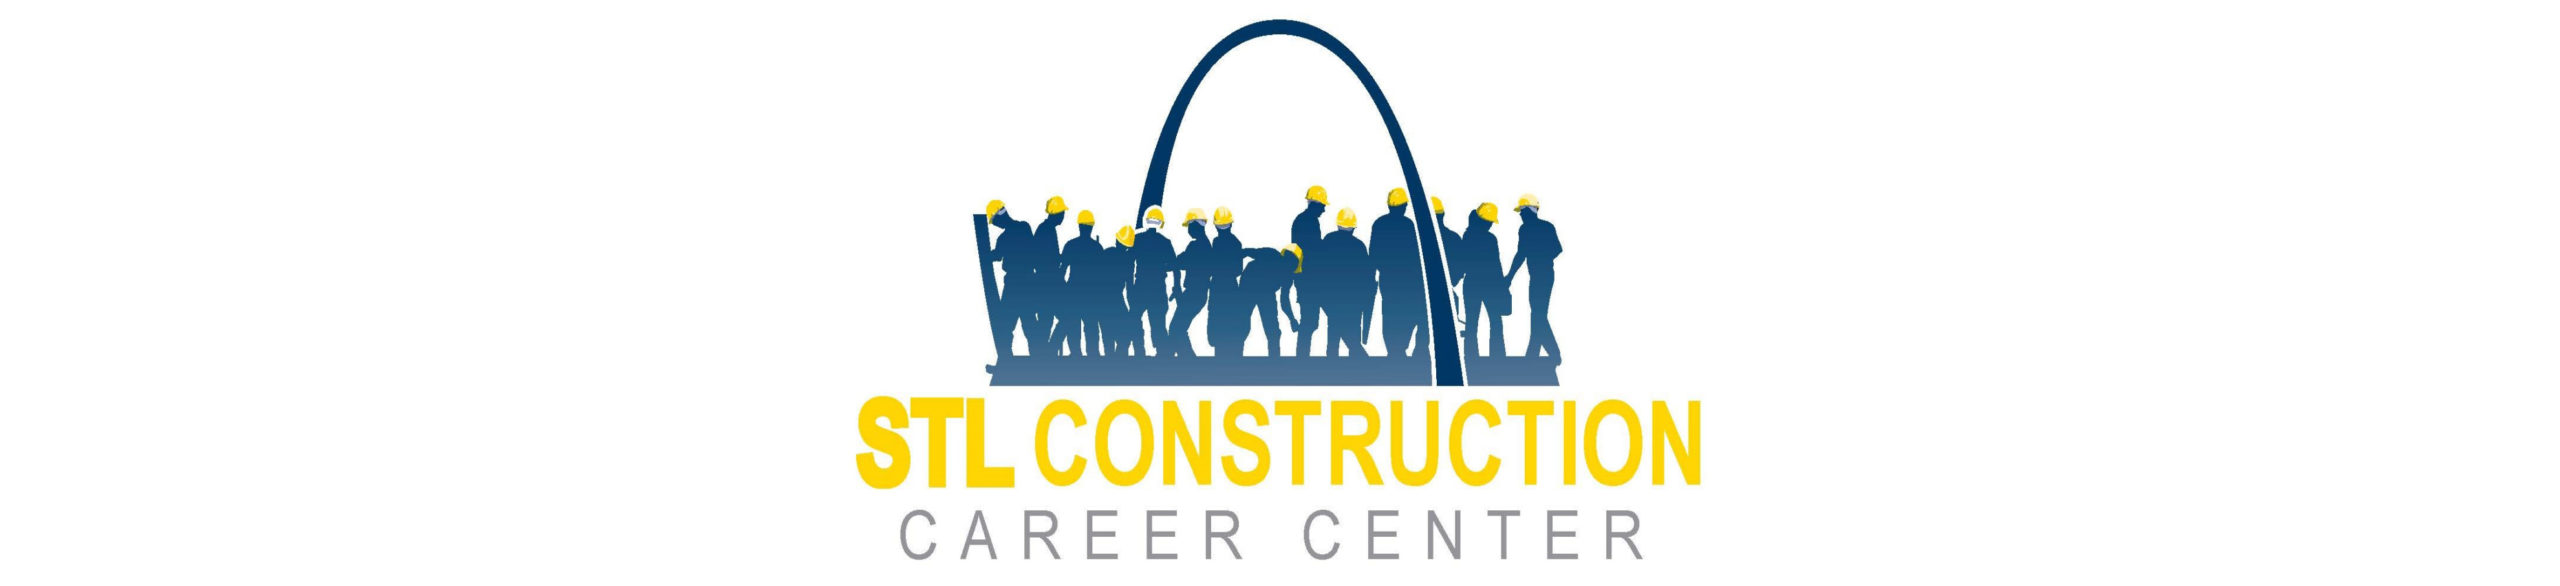 STL Construction Career Center